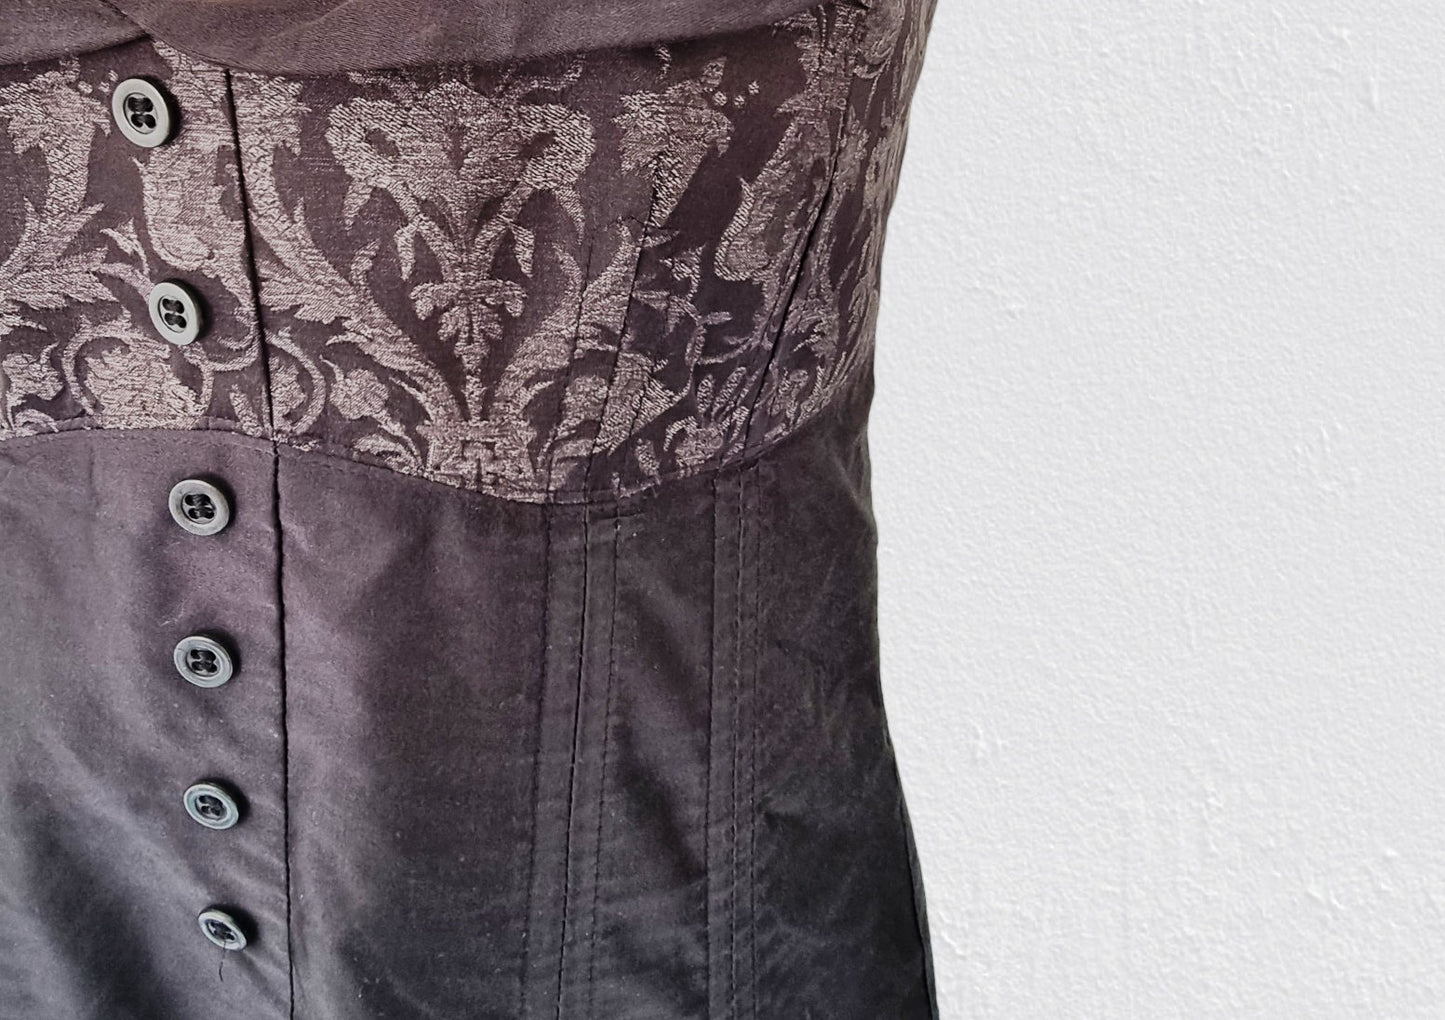 Vera Moda Black Halterneck Fishtail Dress UK 14 US 10 EU42 IT 46 Timeless Fashions